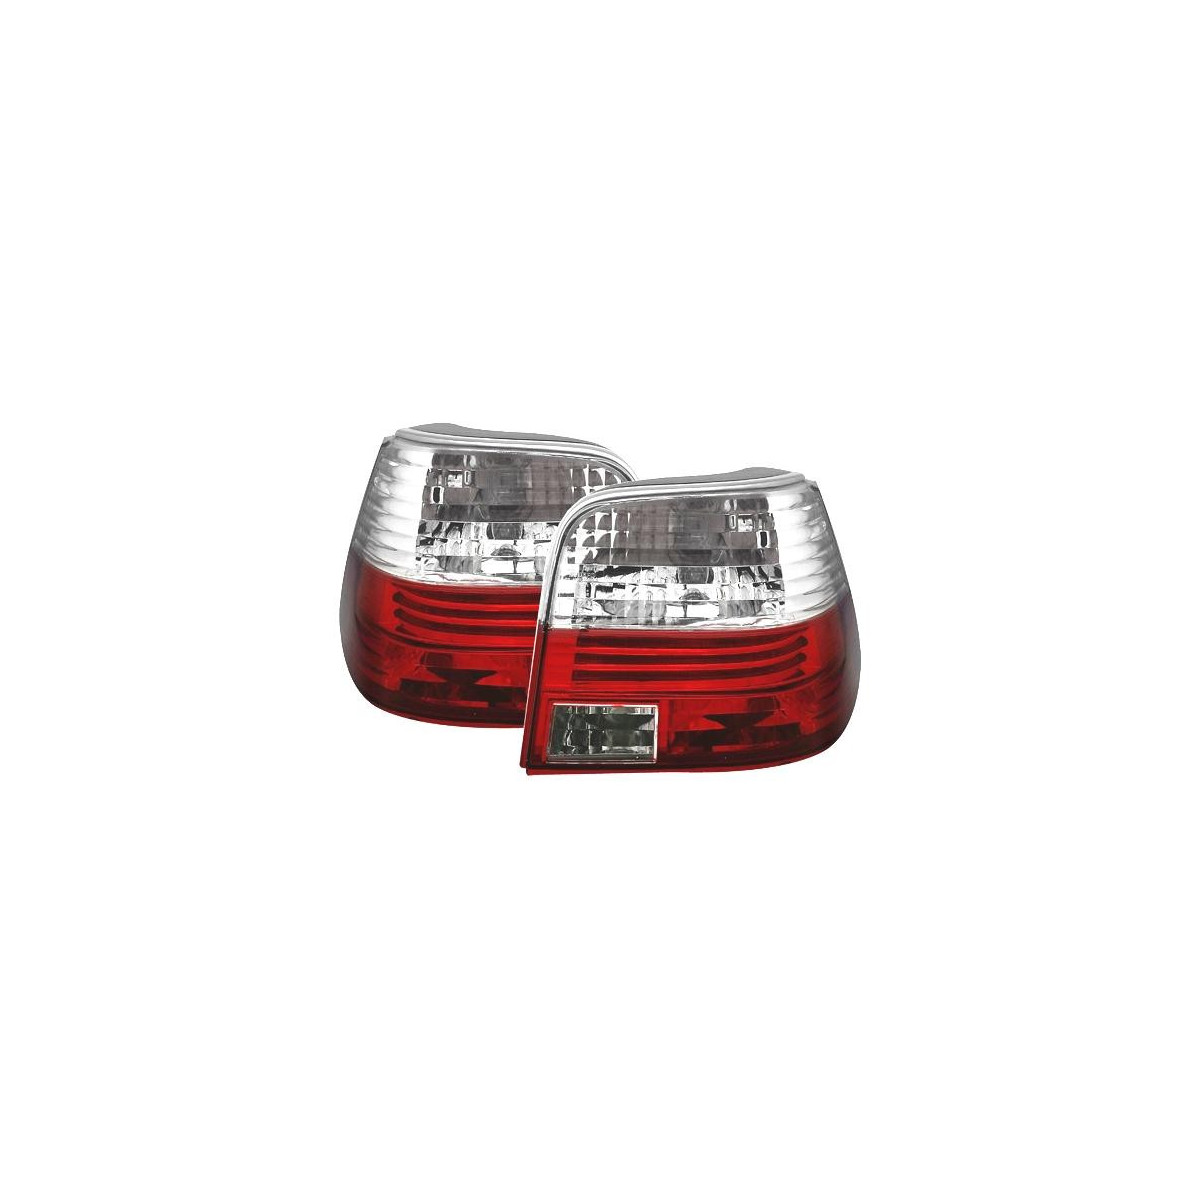 LAMPY TYLNW VW GOLF 4 98-04 RED WHITE NEON DEPO